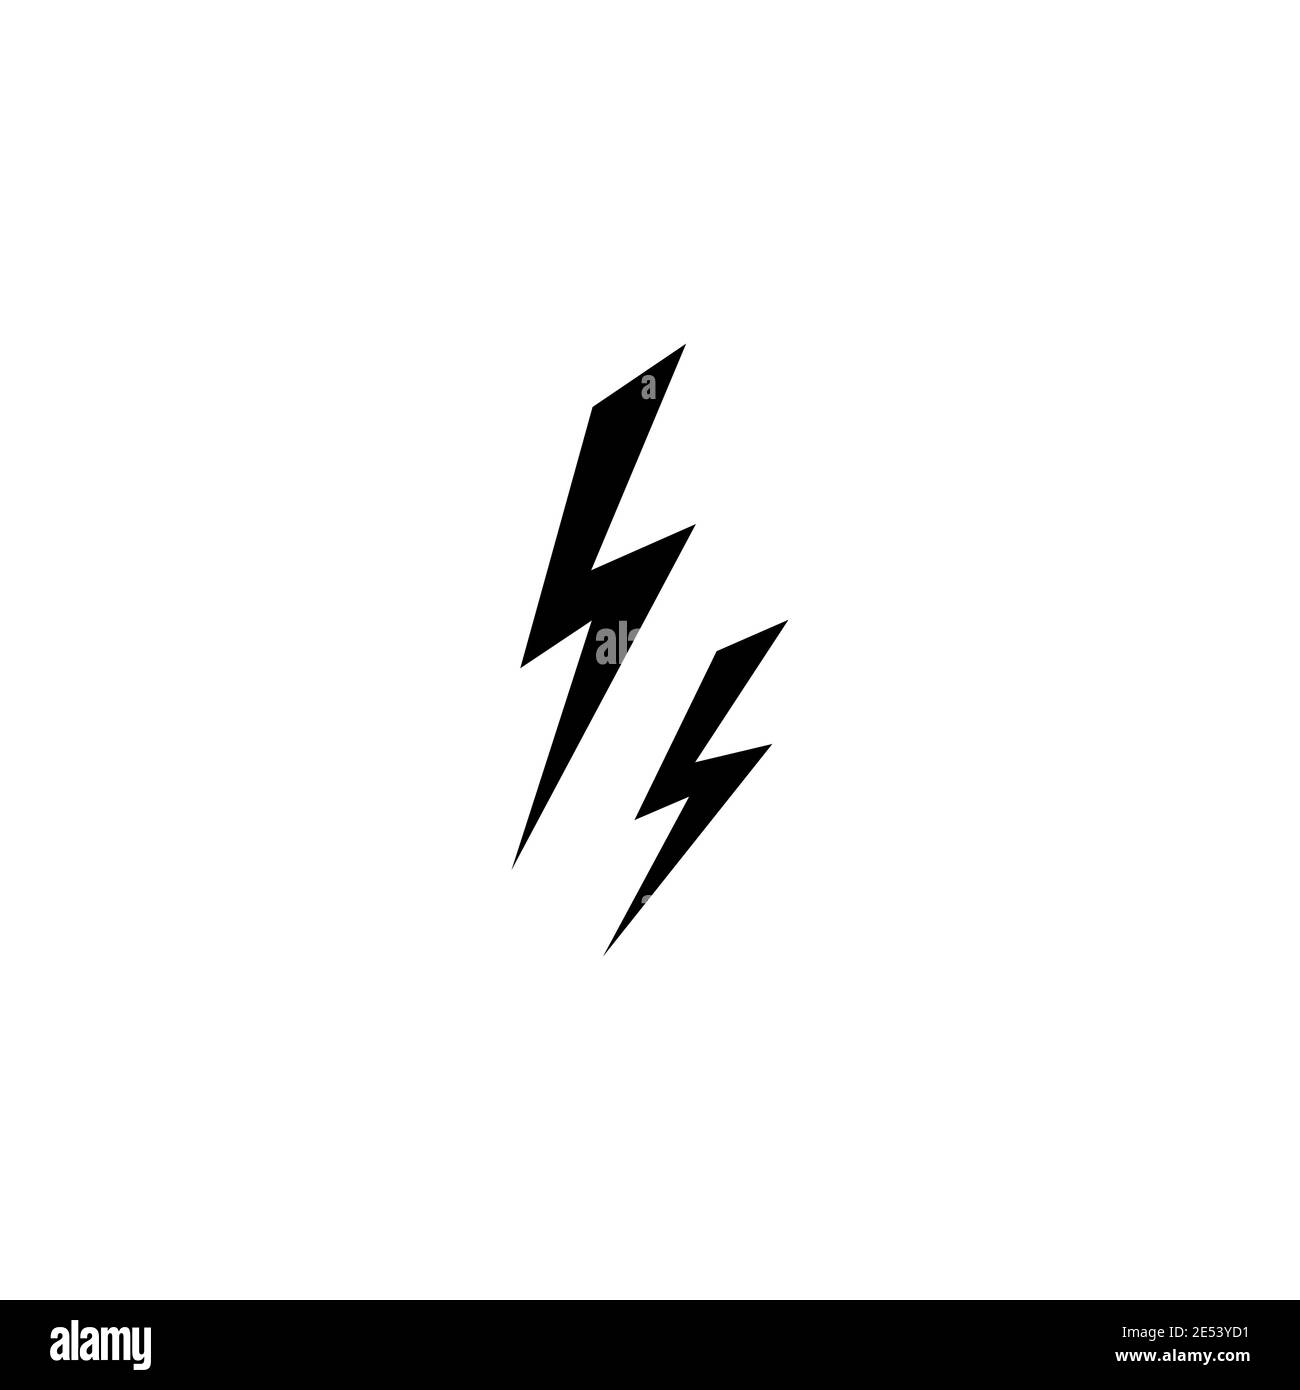 Black lightning bolt simple flat icon. storm or thunder and lightning strike sign isolated on white. High electricity voltage symbol. Vetor illustrati Stock Vector